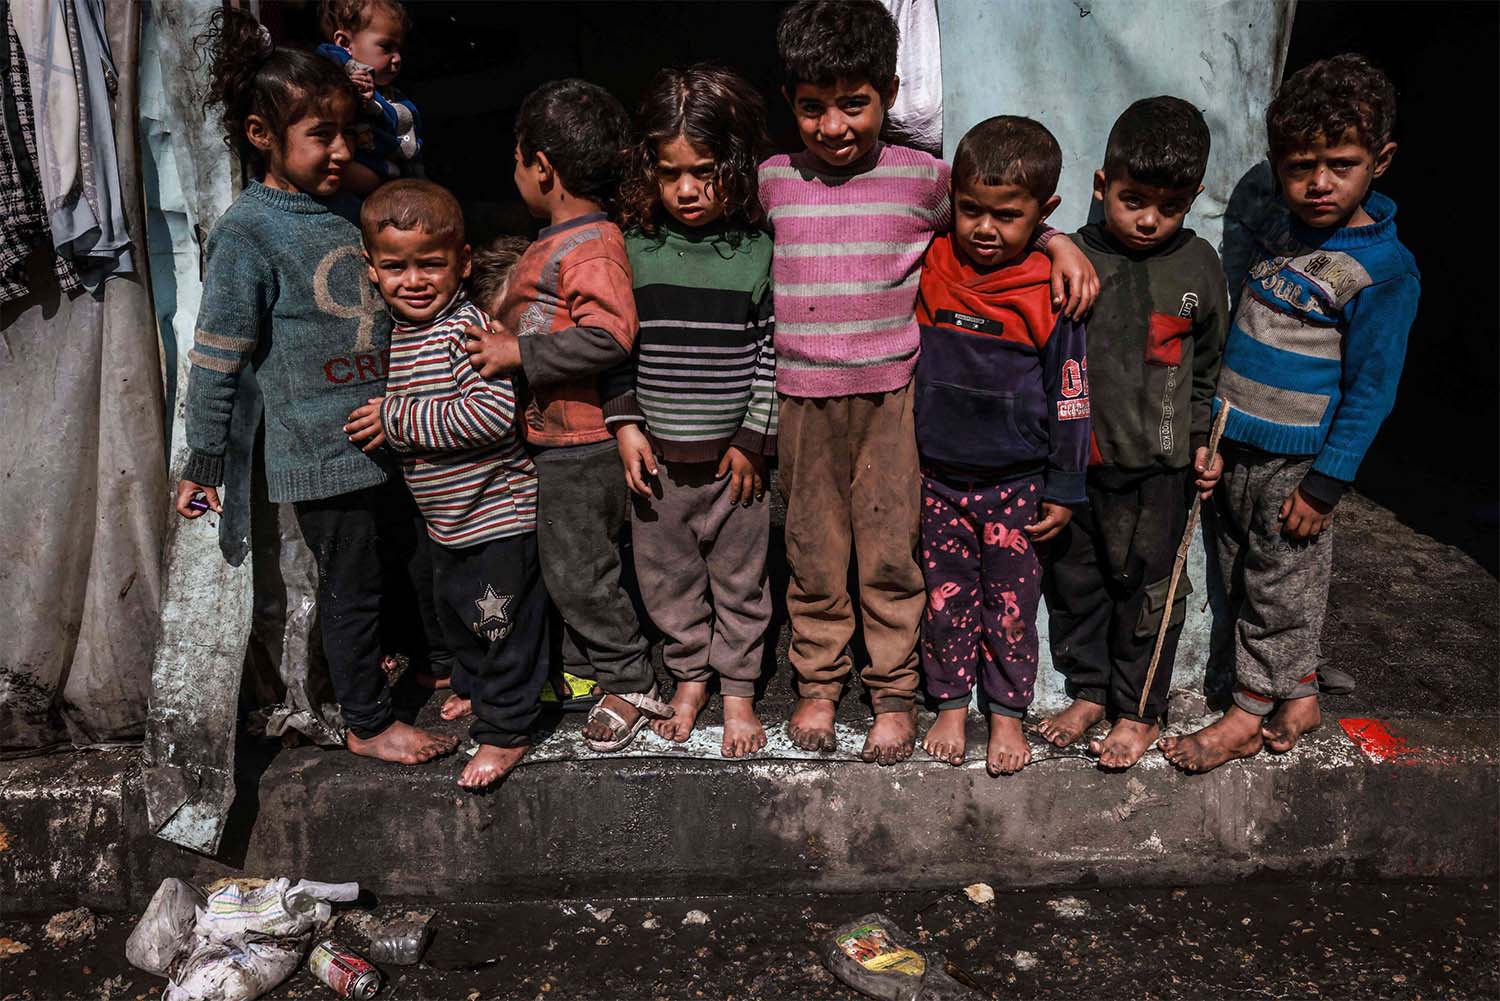 Children's malnutrition is spreading fast and reaching unprecedented levels in Gaza